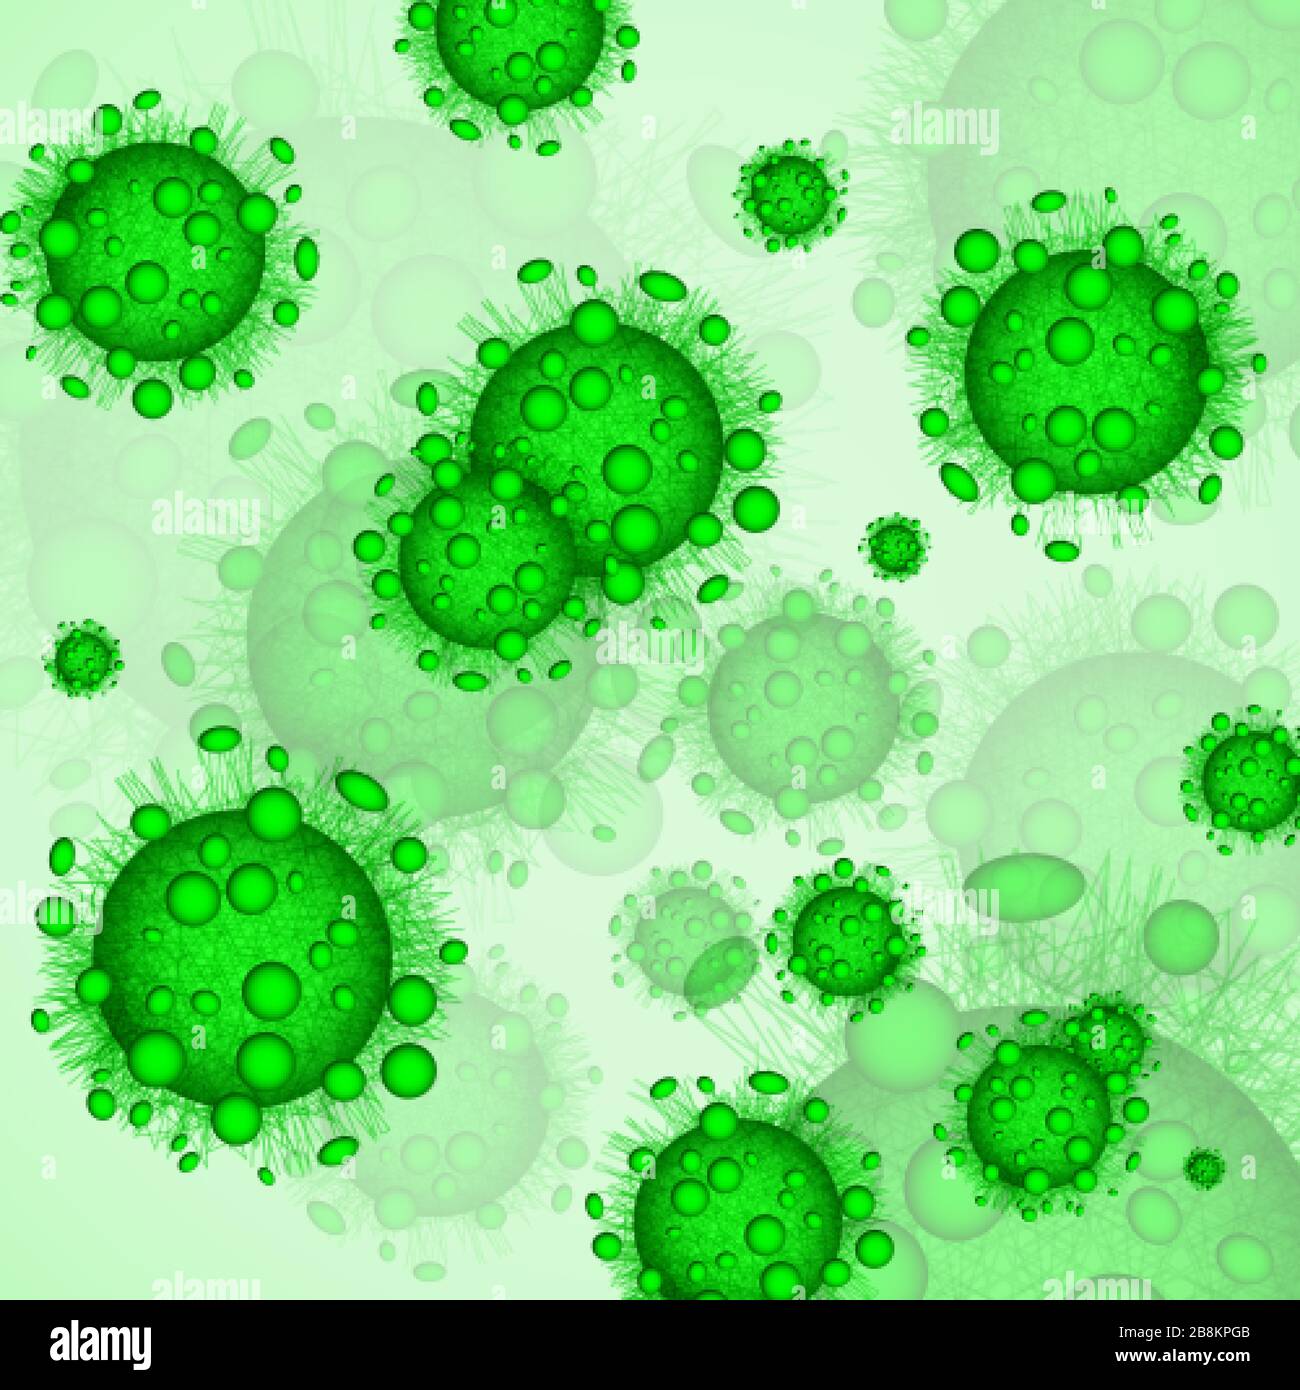 Green Virus Cells. Dangerous infection or disease. Medicine warning background. Vector illustration Stock Vector